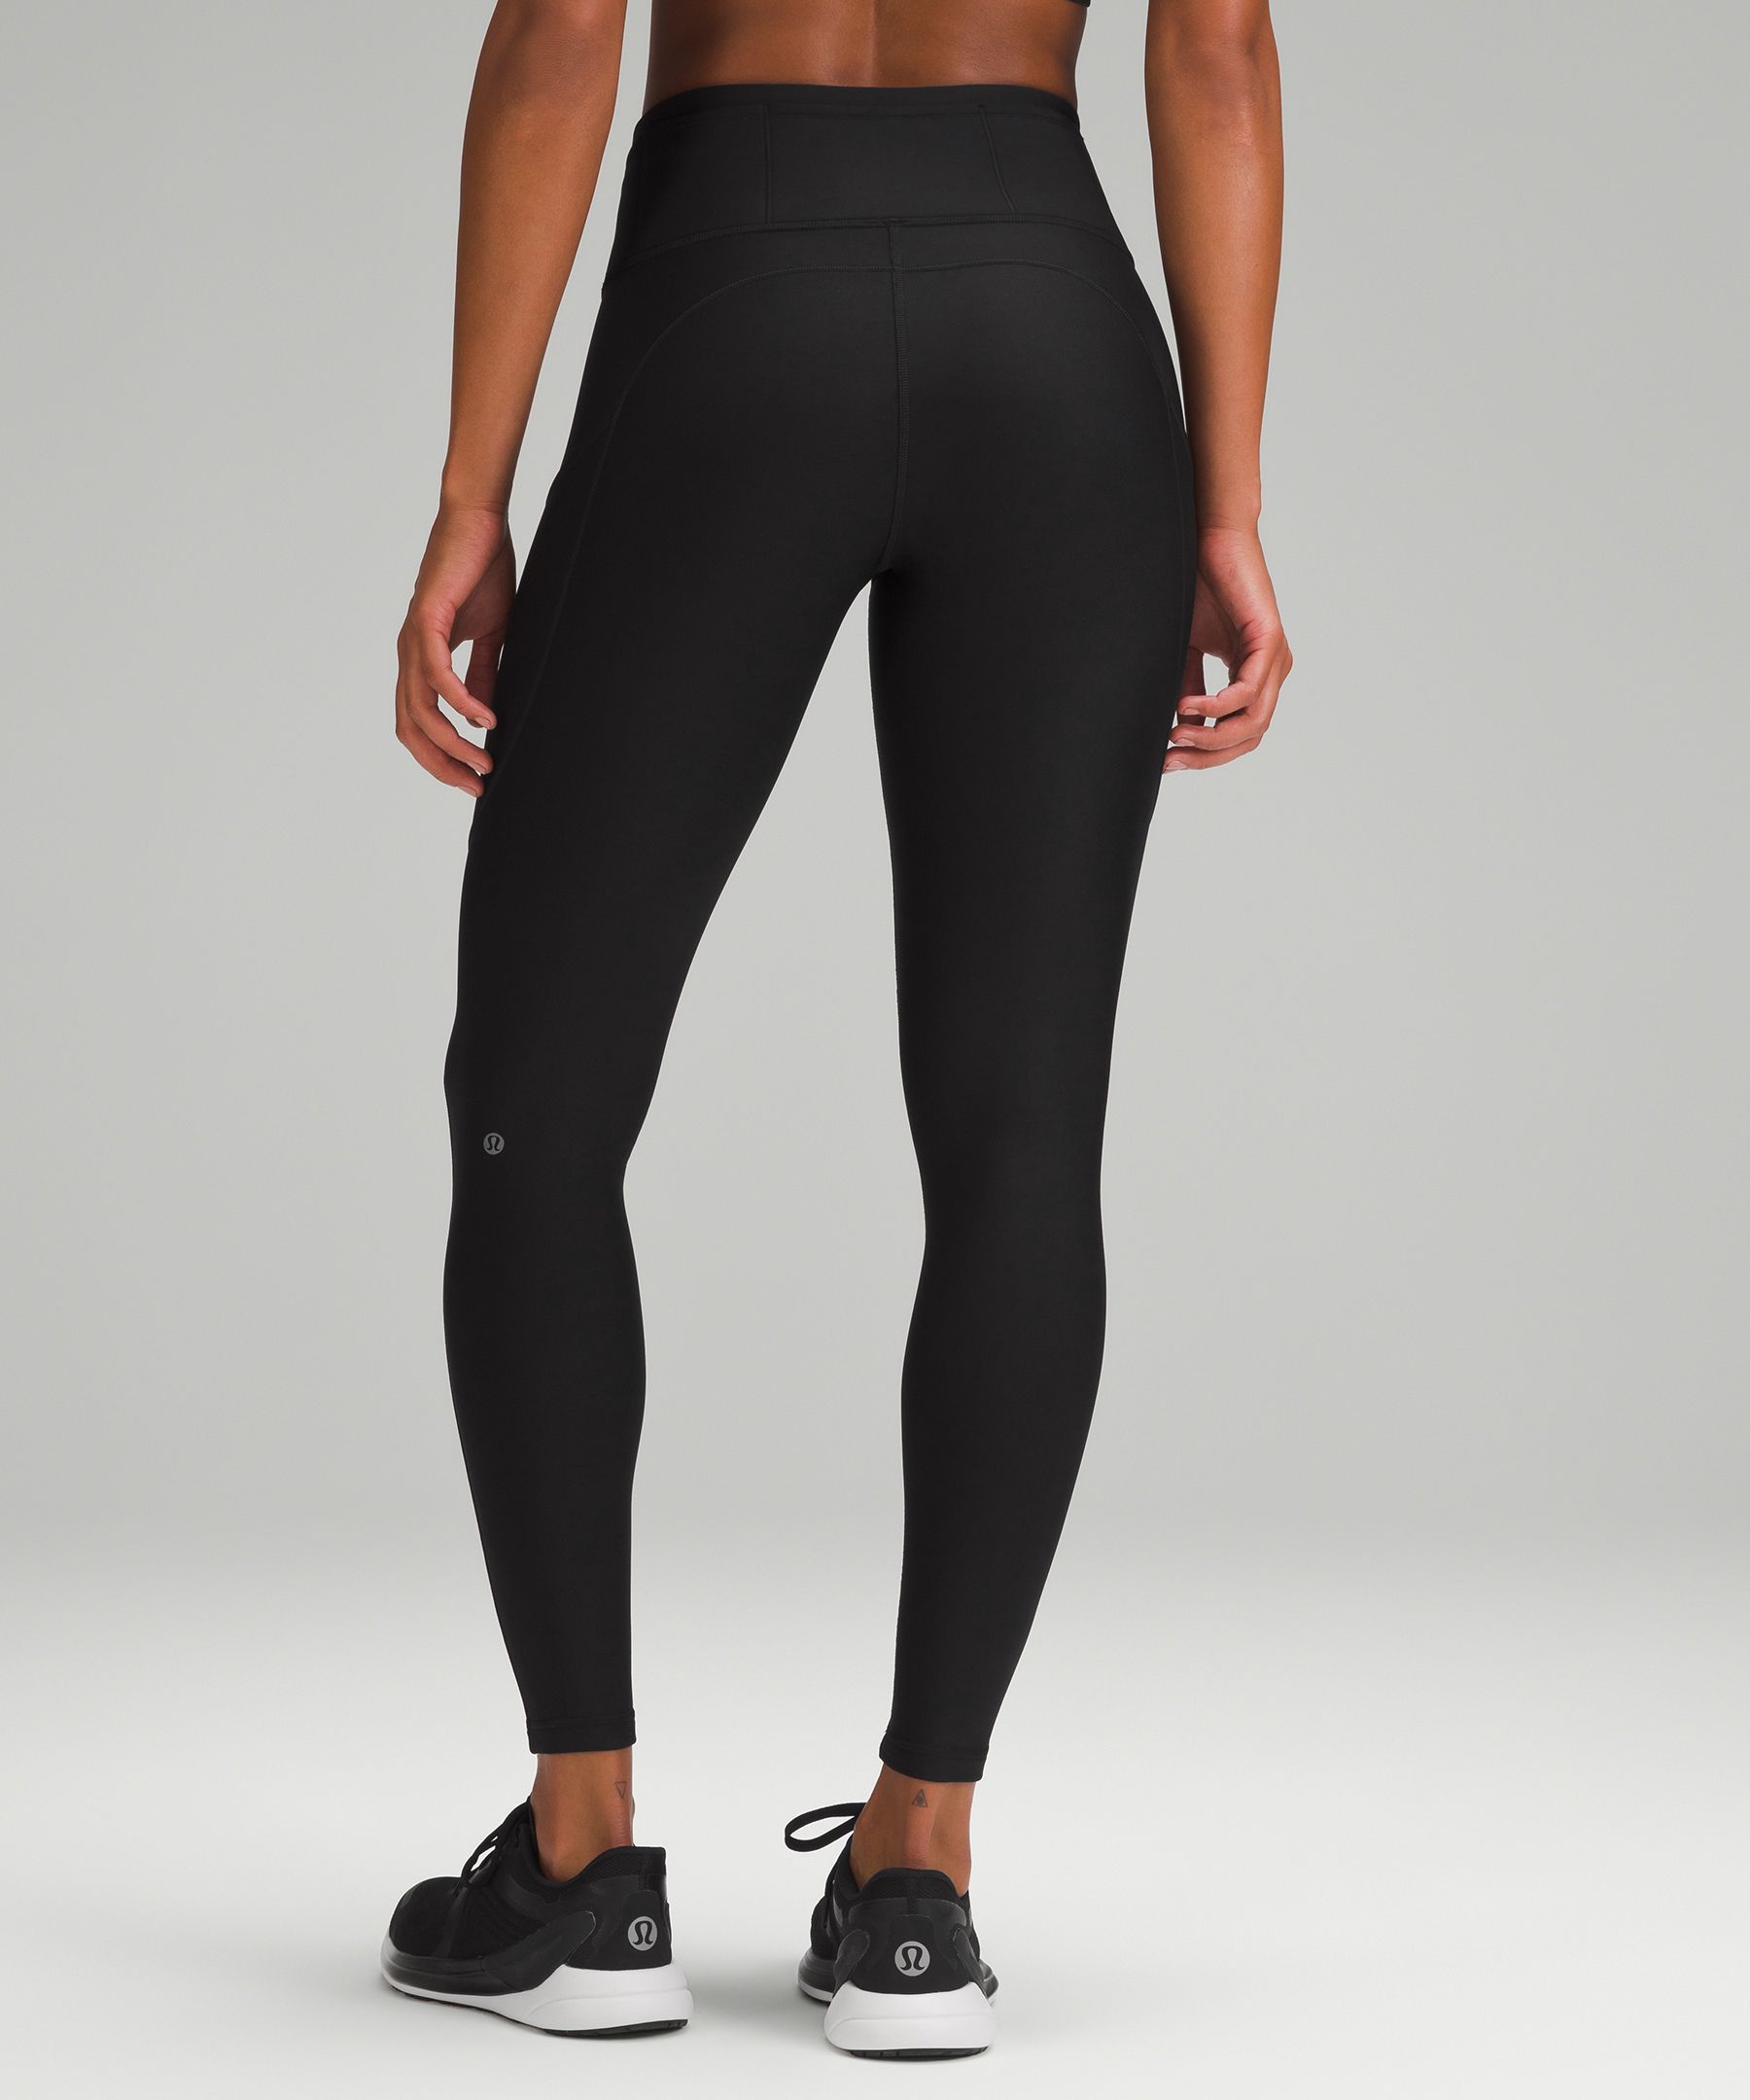 shopping wholesale Ivivva girls black leggings with style on